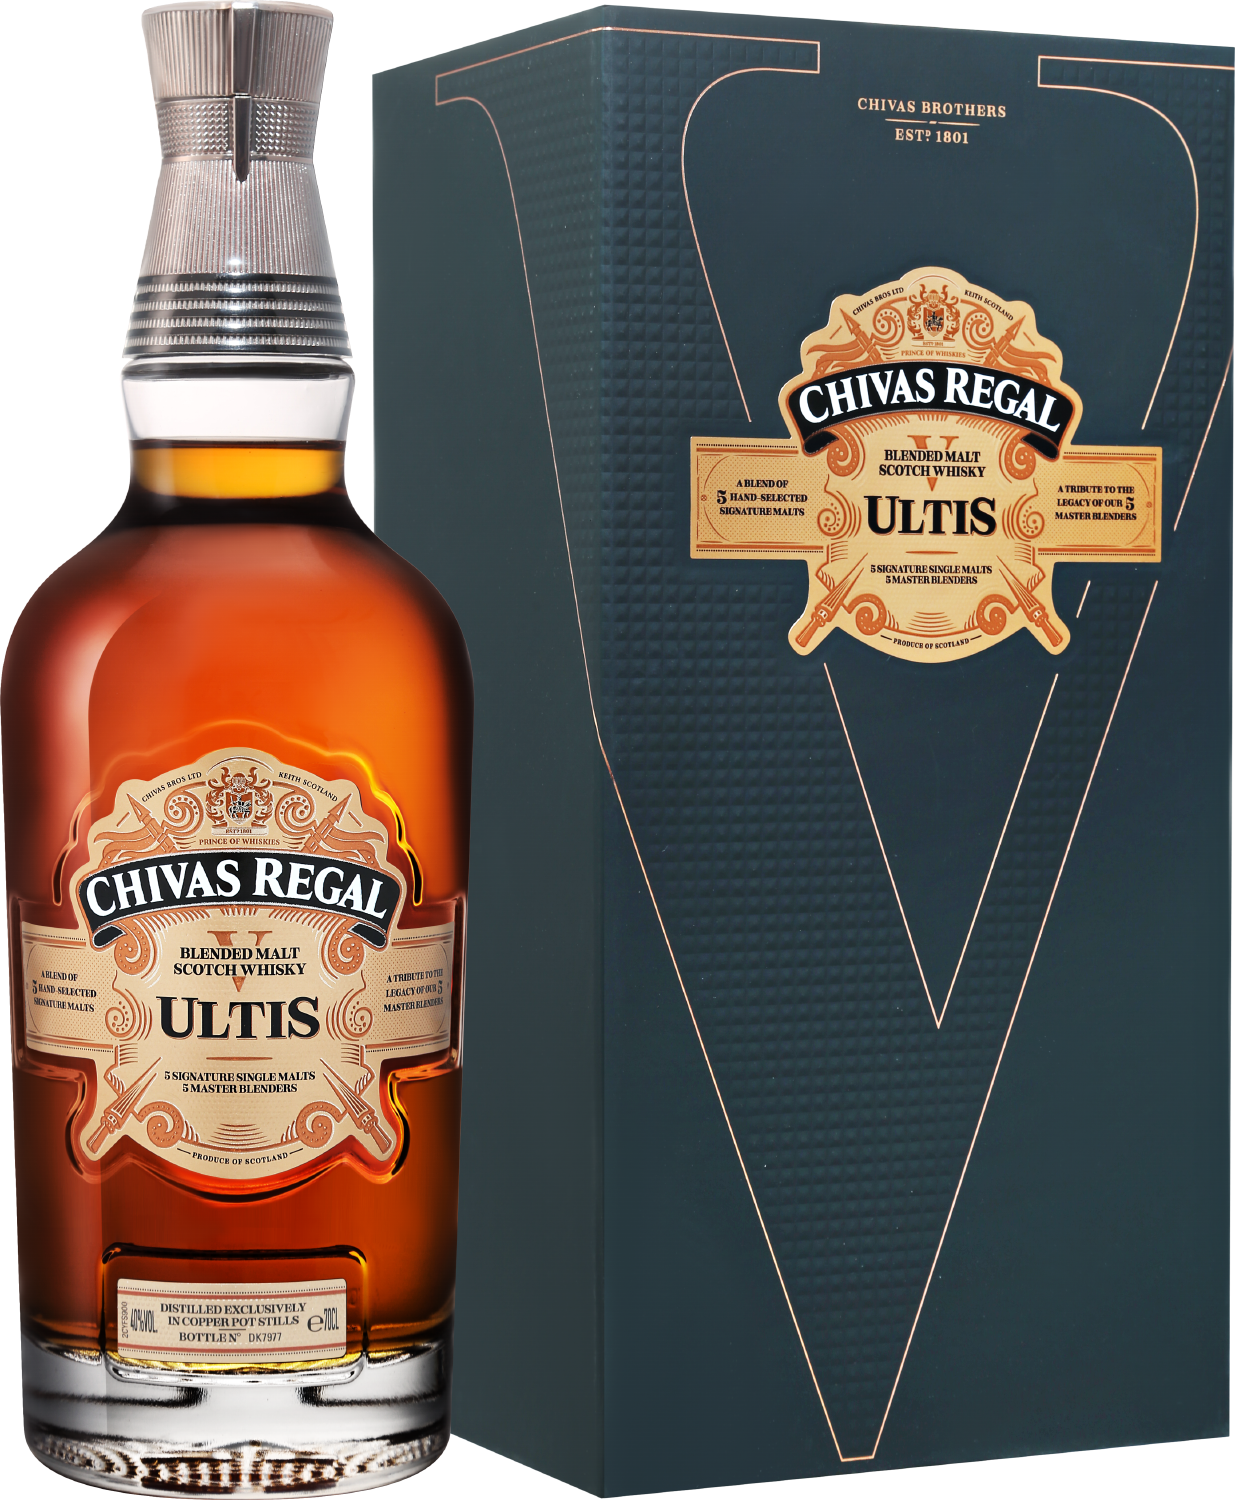 Chivas Regal Ultis Blended Malt Scotch Whisky (gift box) chivas regal blended scotch whisky 25 y o gift box